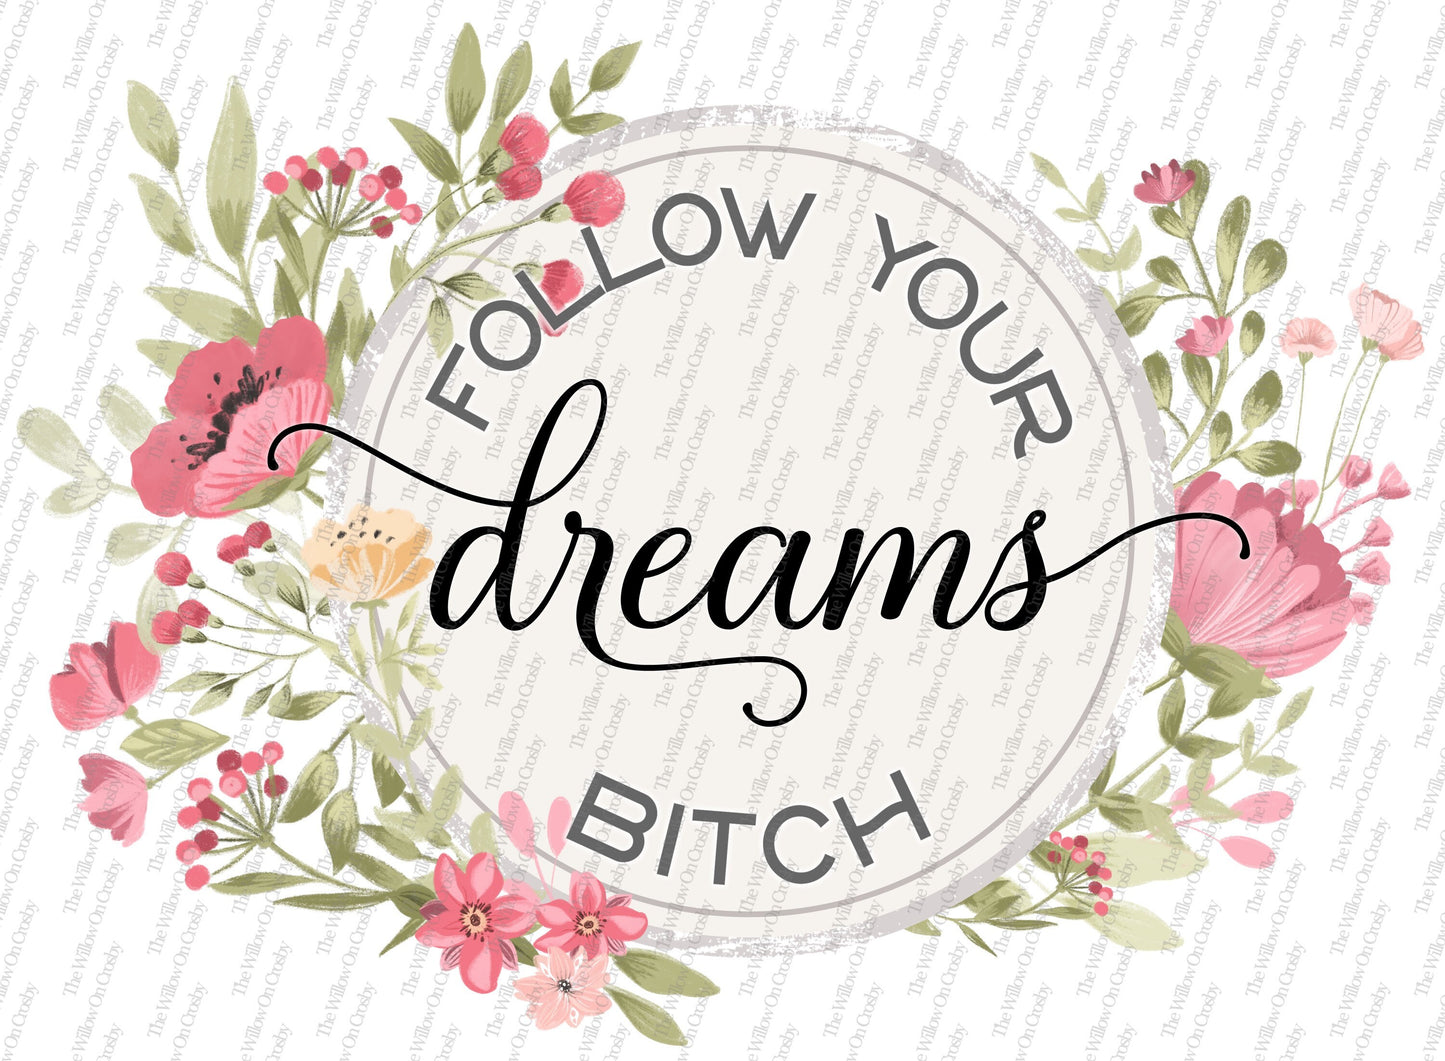 Follow Your Dreams Bitch Sublimation Transfer